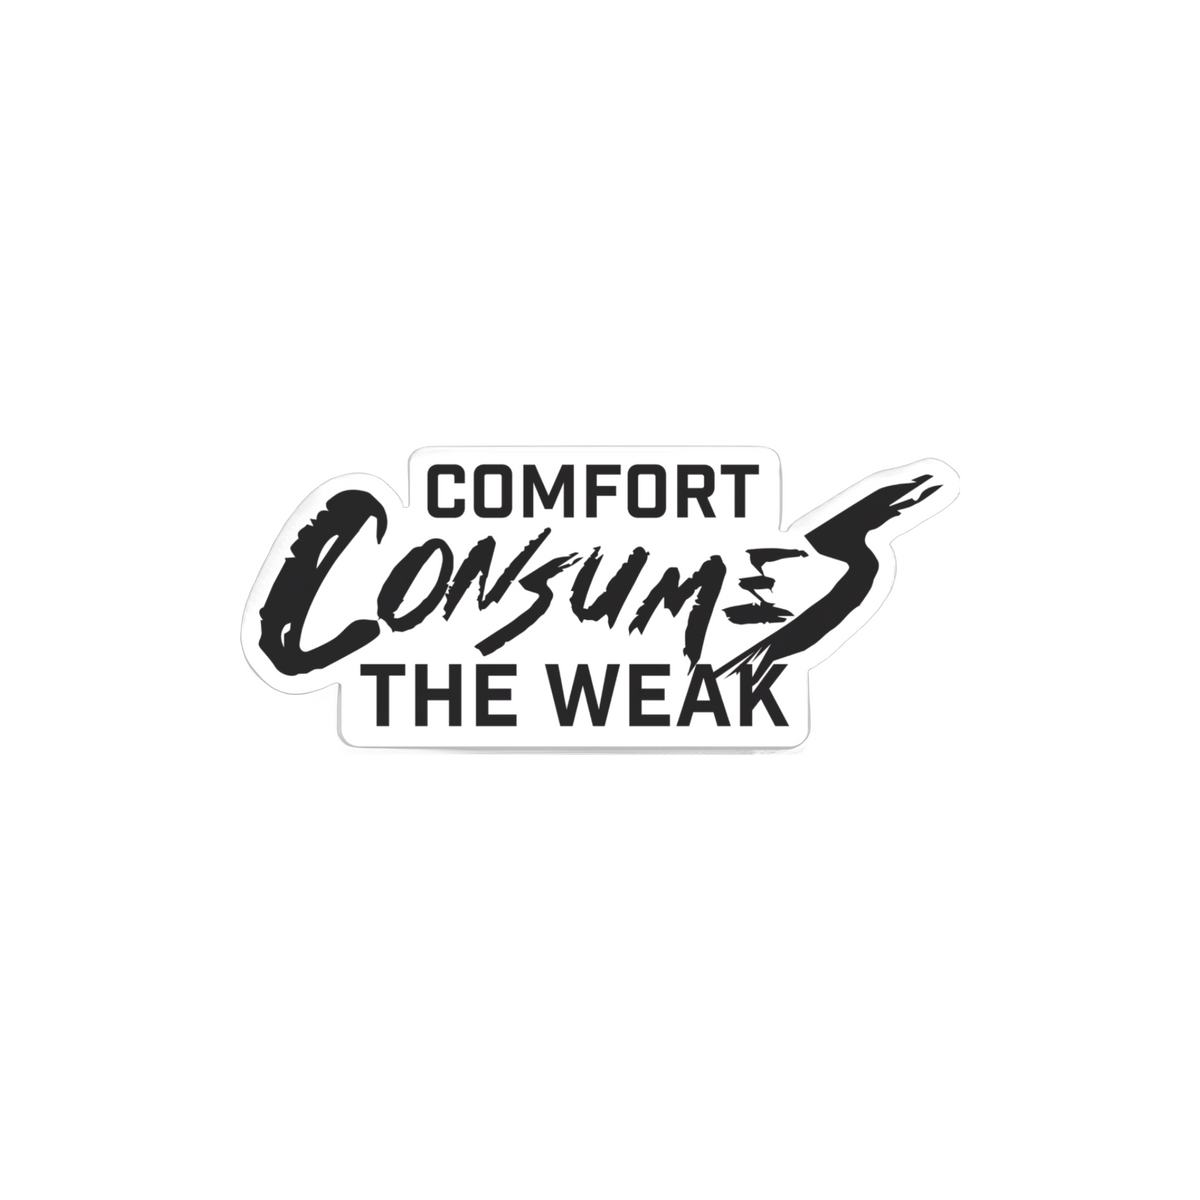 Comfort Consumes The Weak